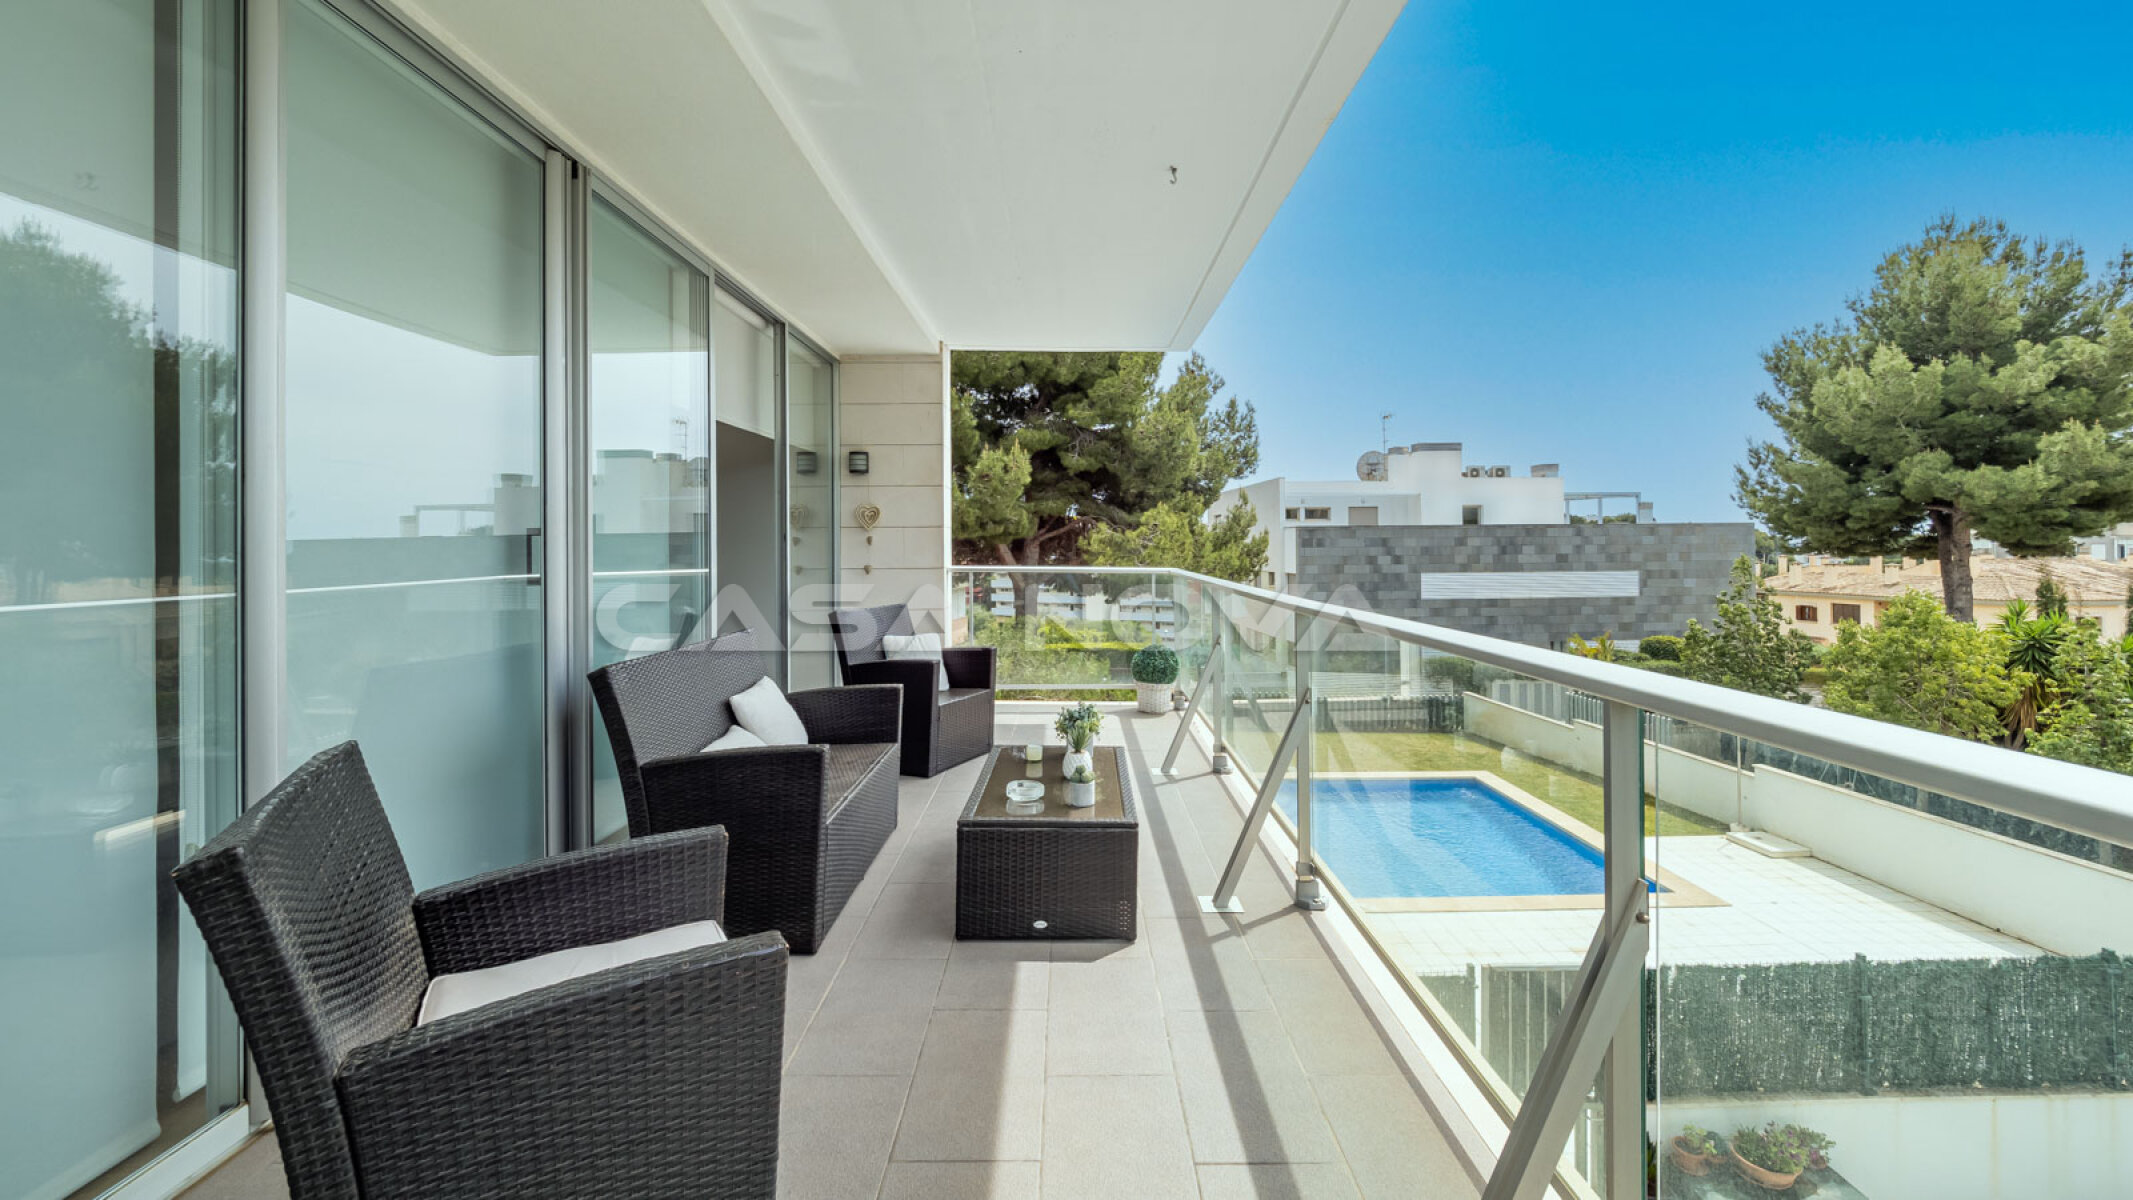 Moderno apartamento en Mallorca en una exclusiva zona residencial